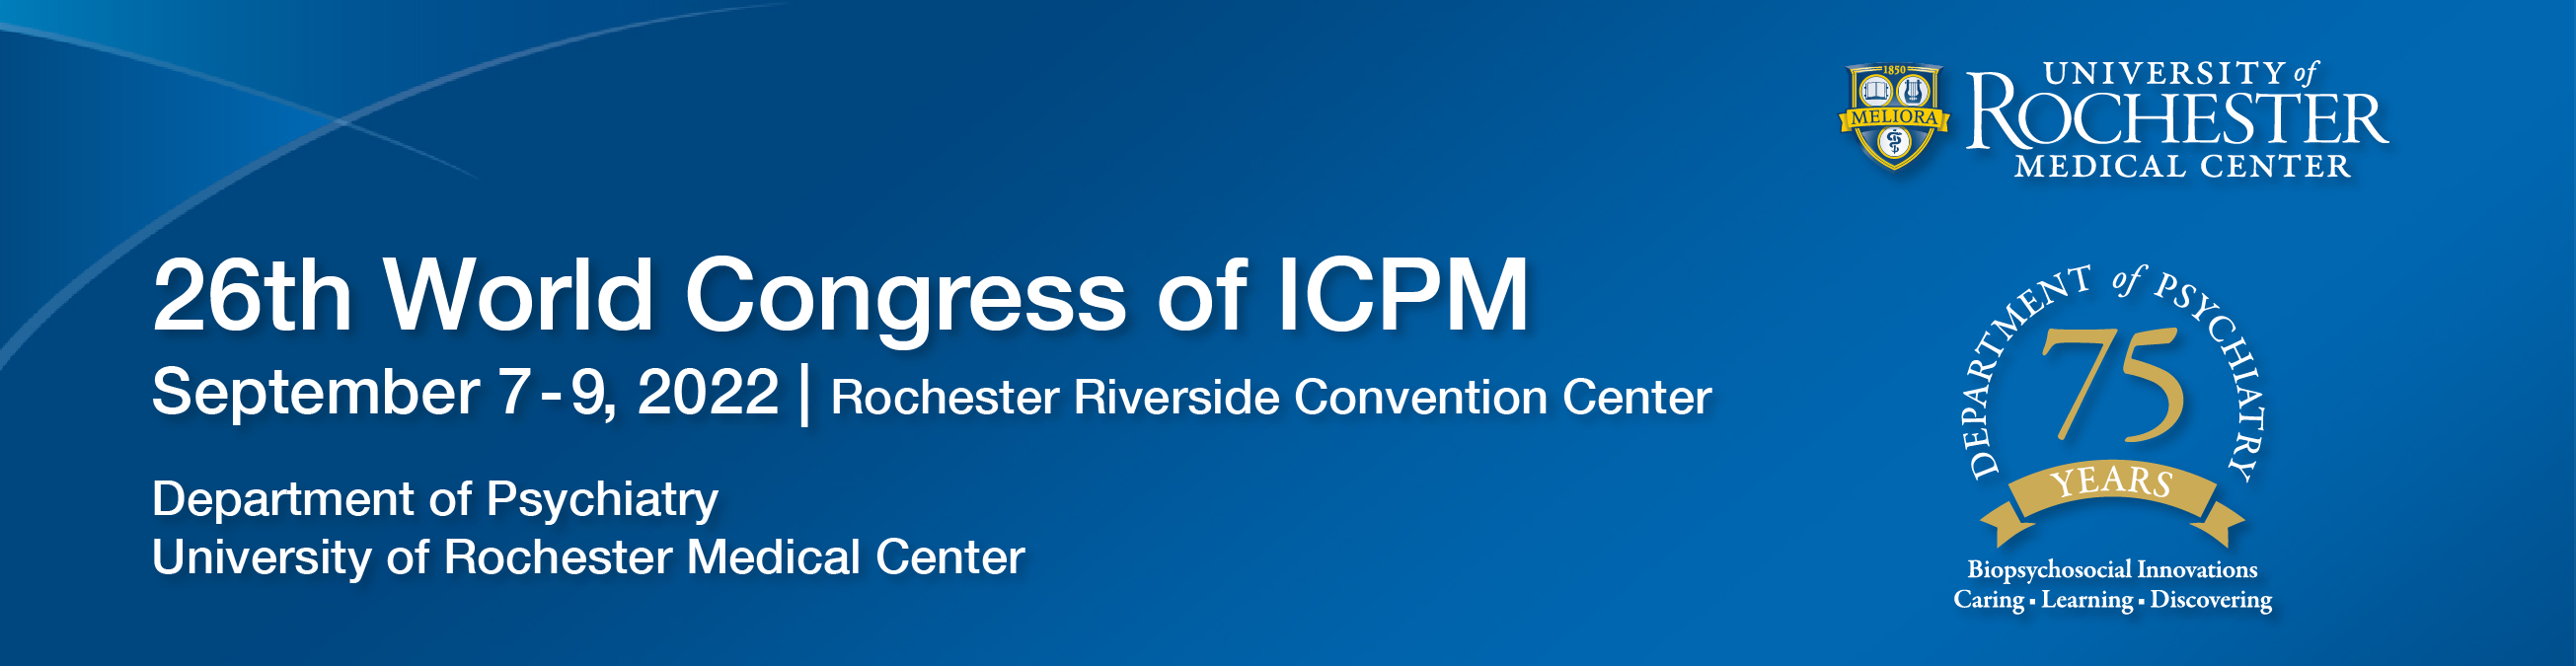 ICPM World Congress event